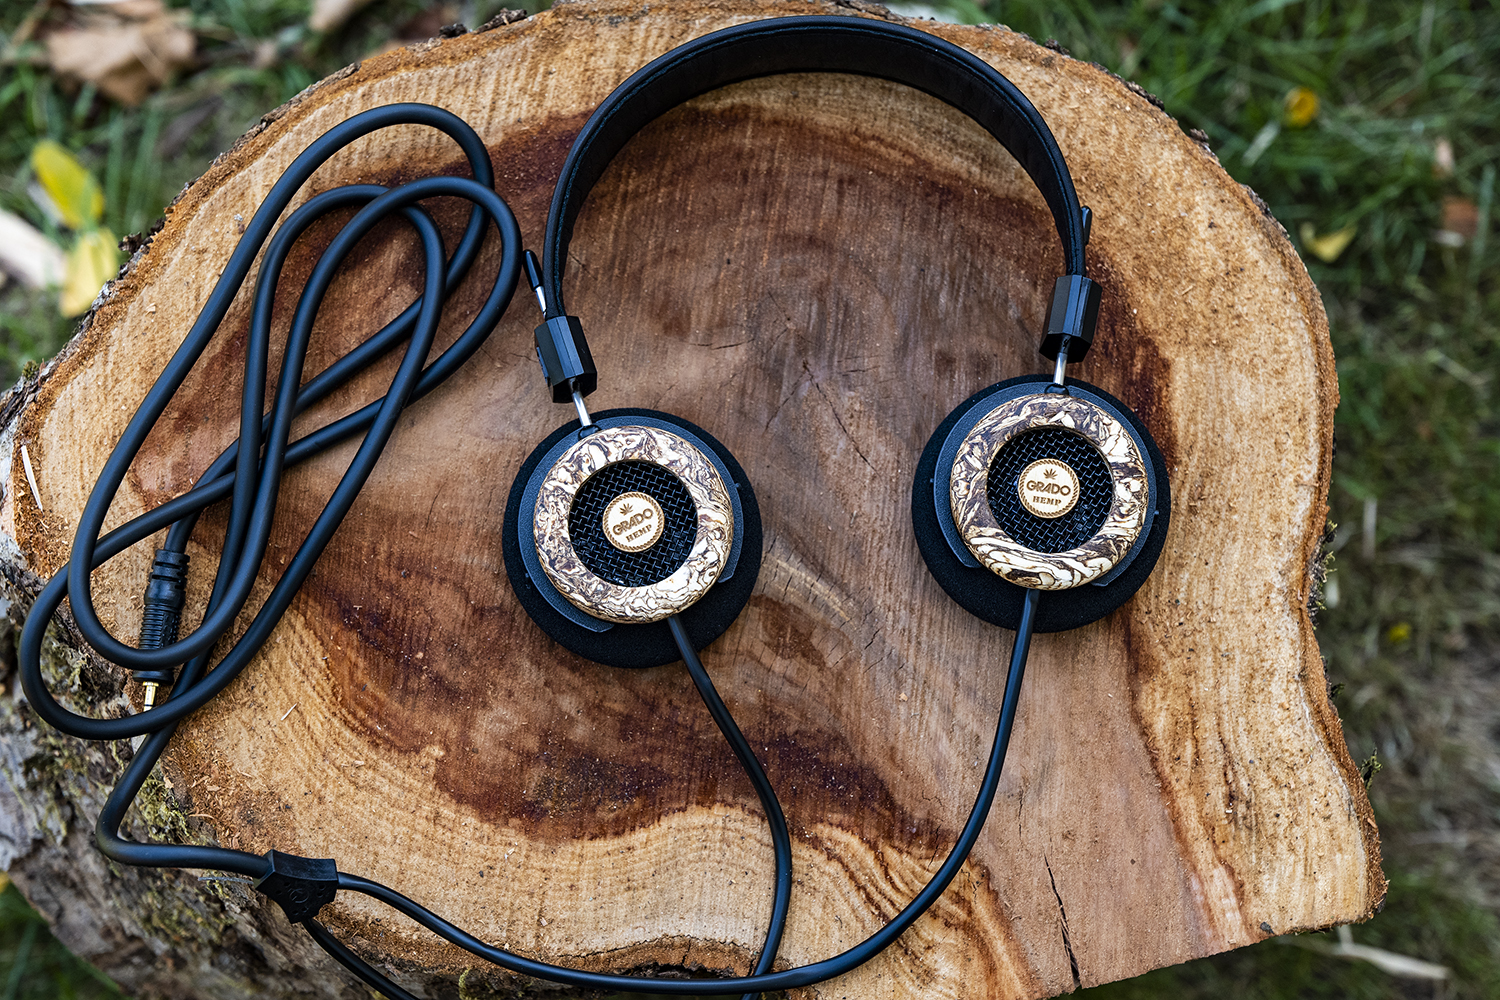 Grado Hemp Headphones Review: An Audio High You Won't Forget